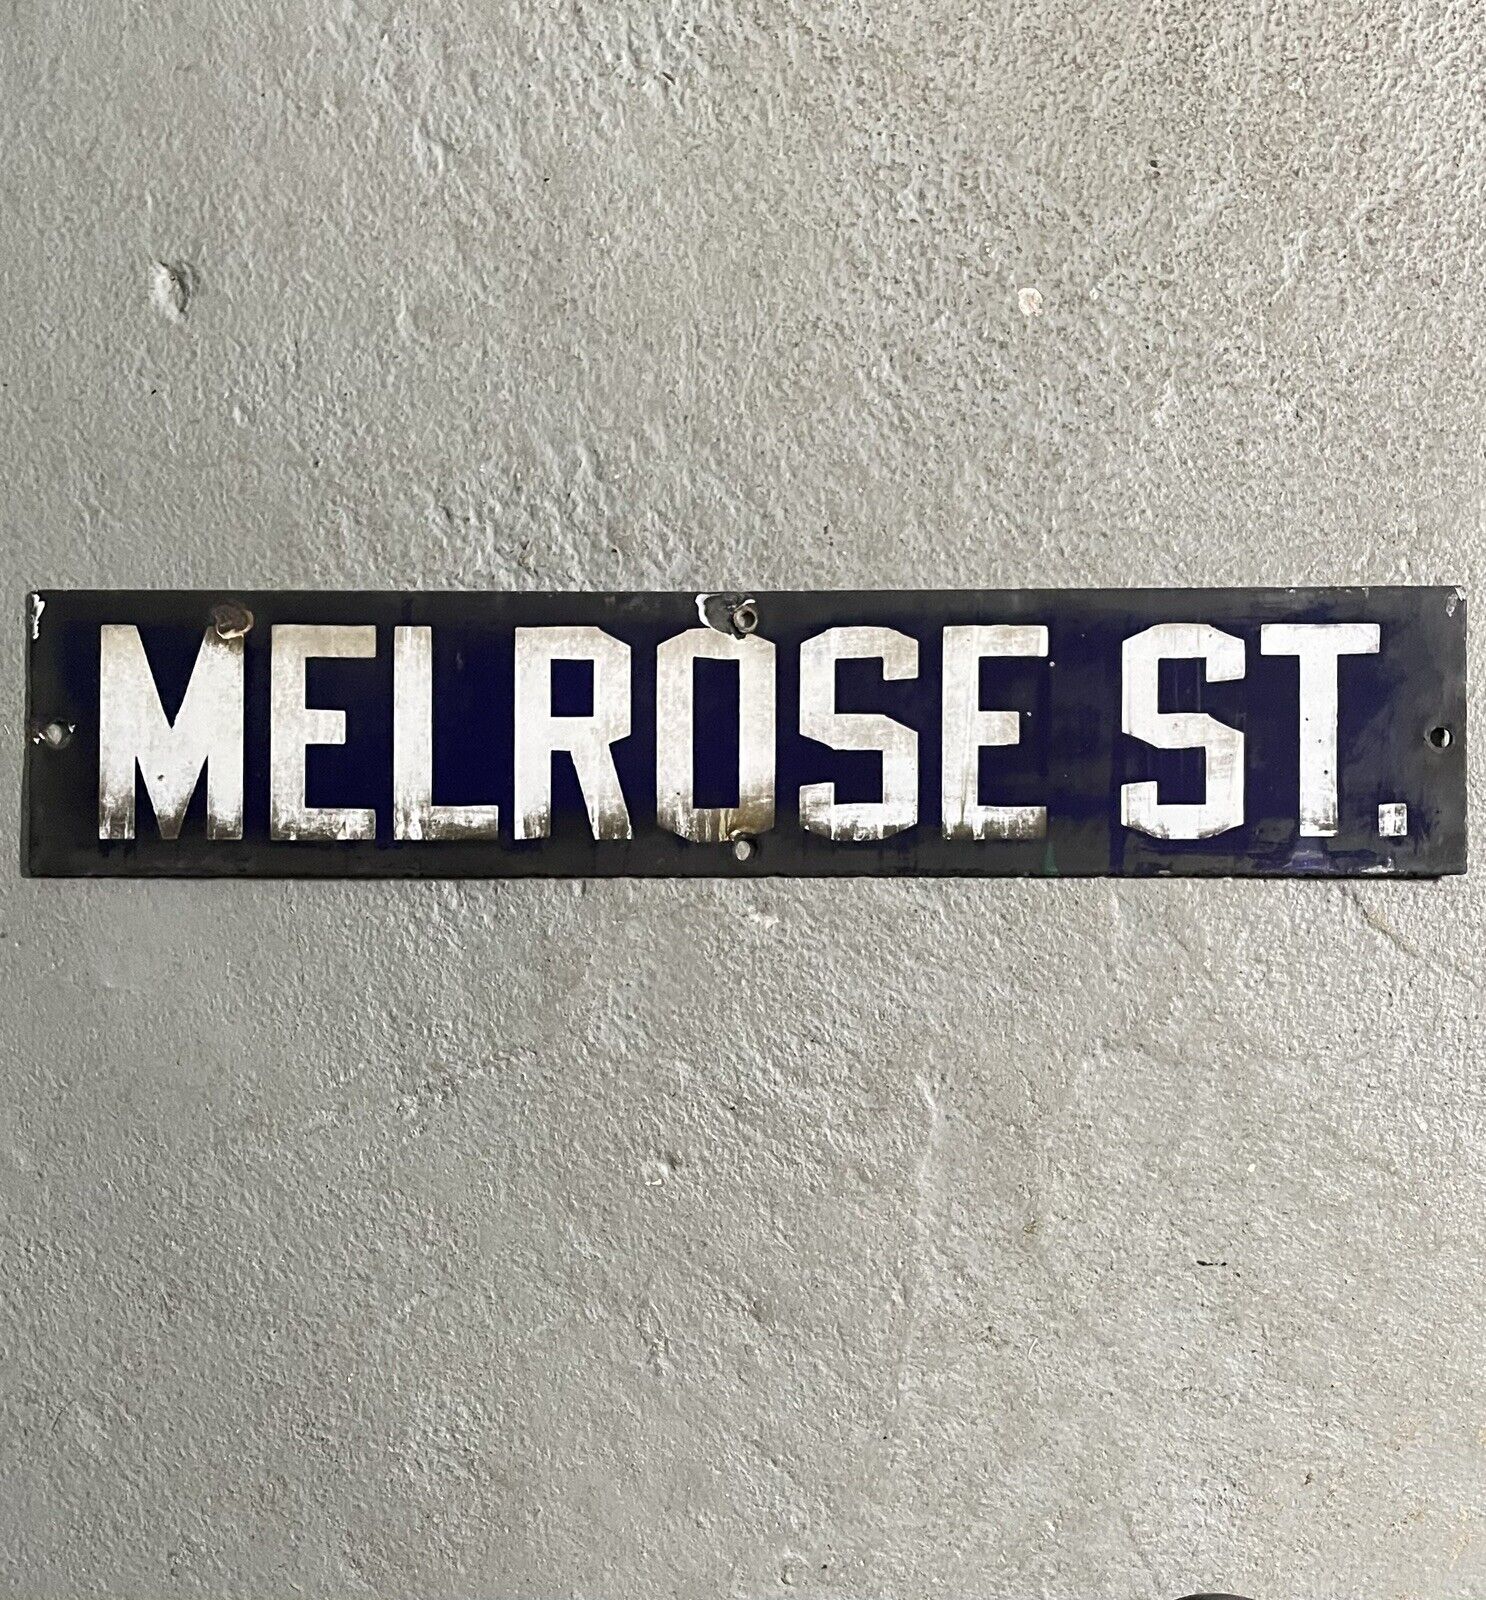 Antique Porcelain Melrose St Street Sign Contact Blue 1920s Era Street Sign 